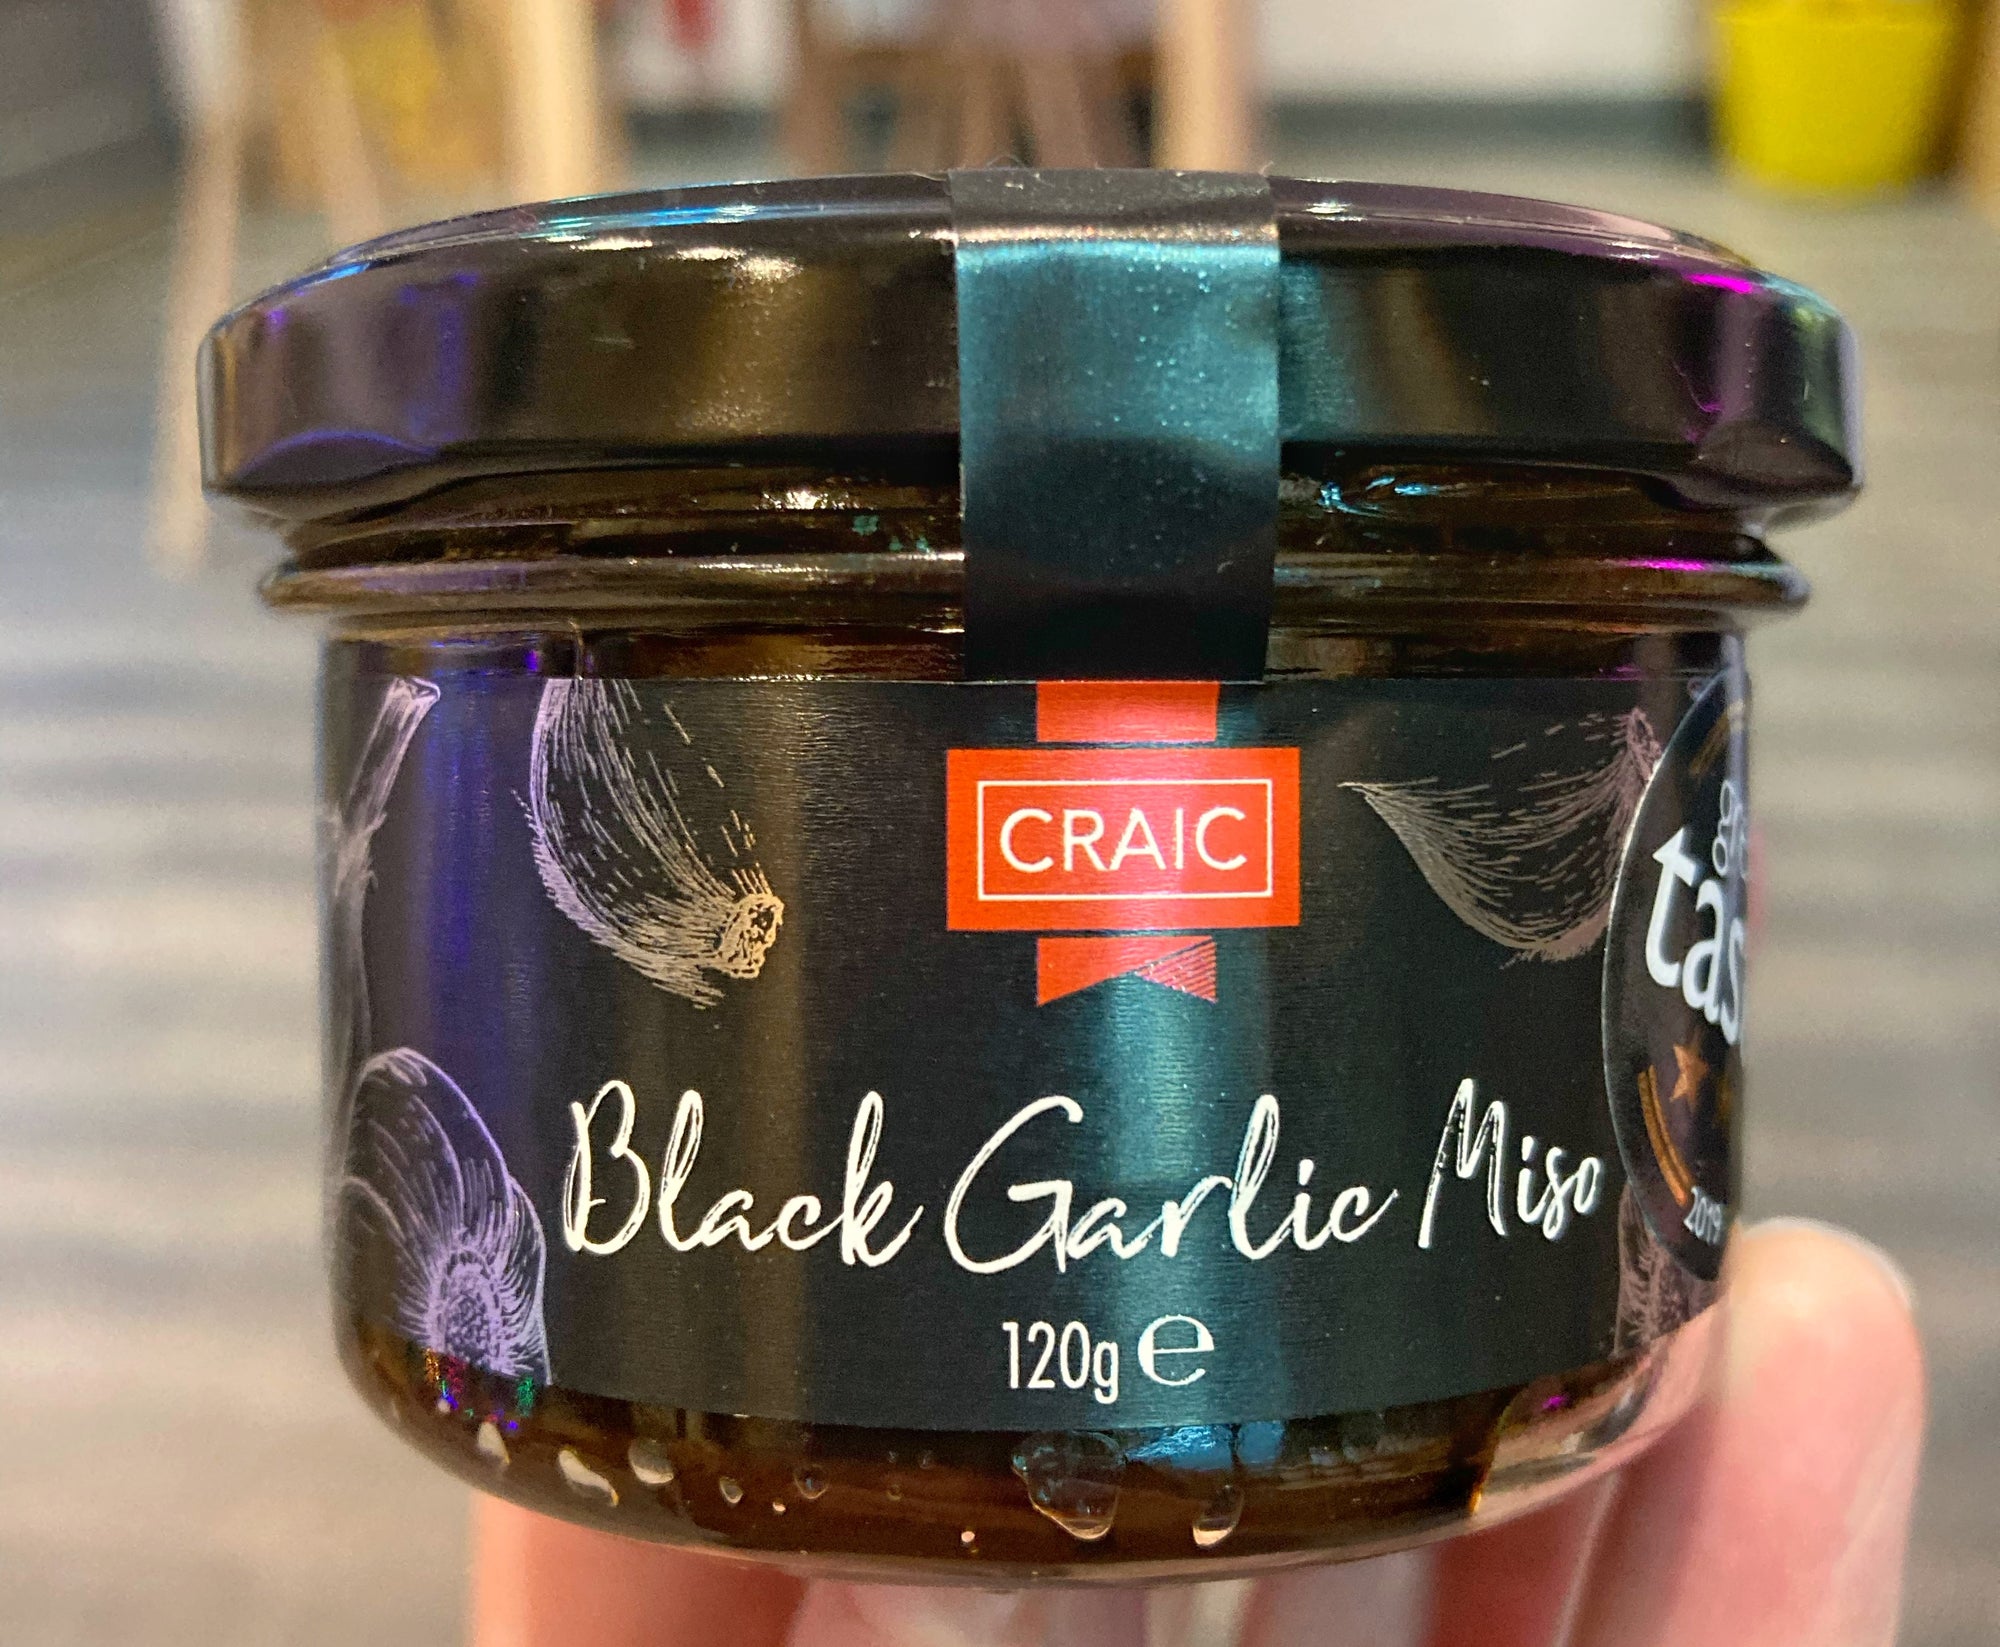 Black garlic & miso